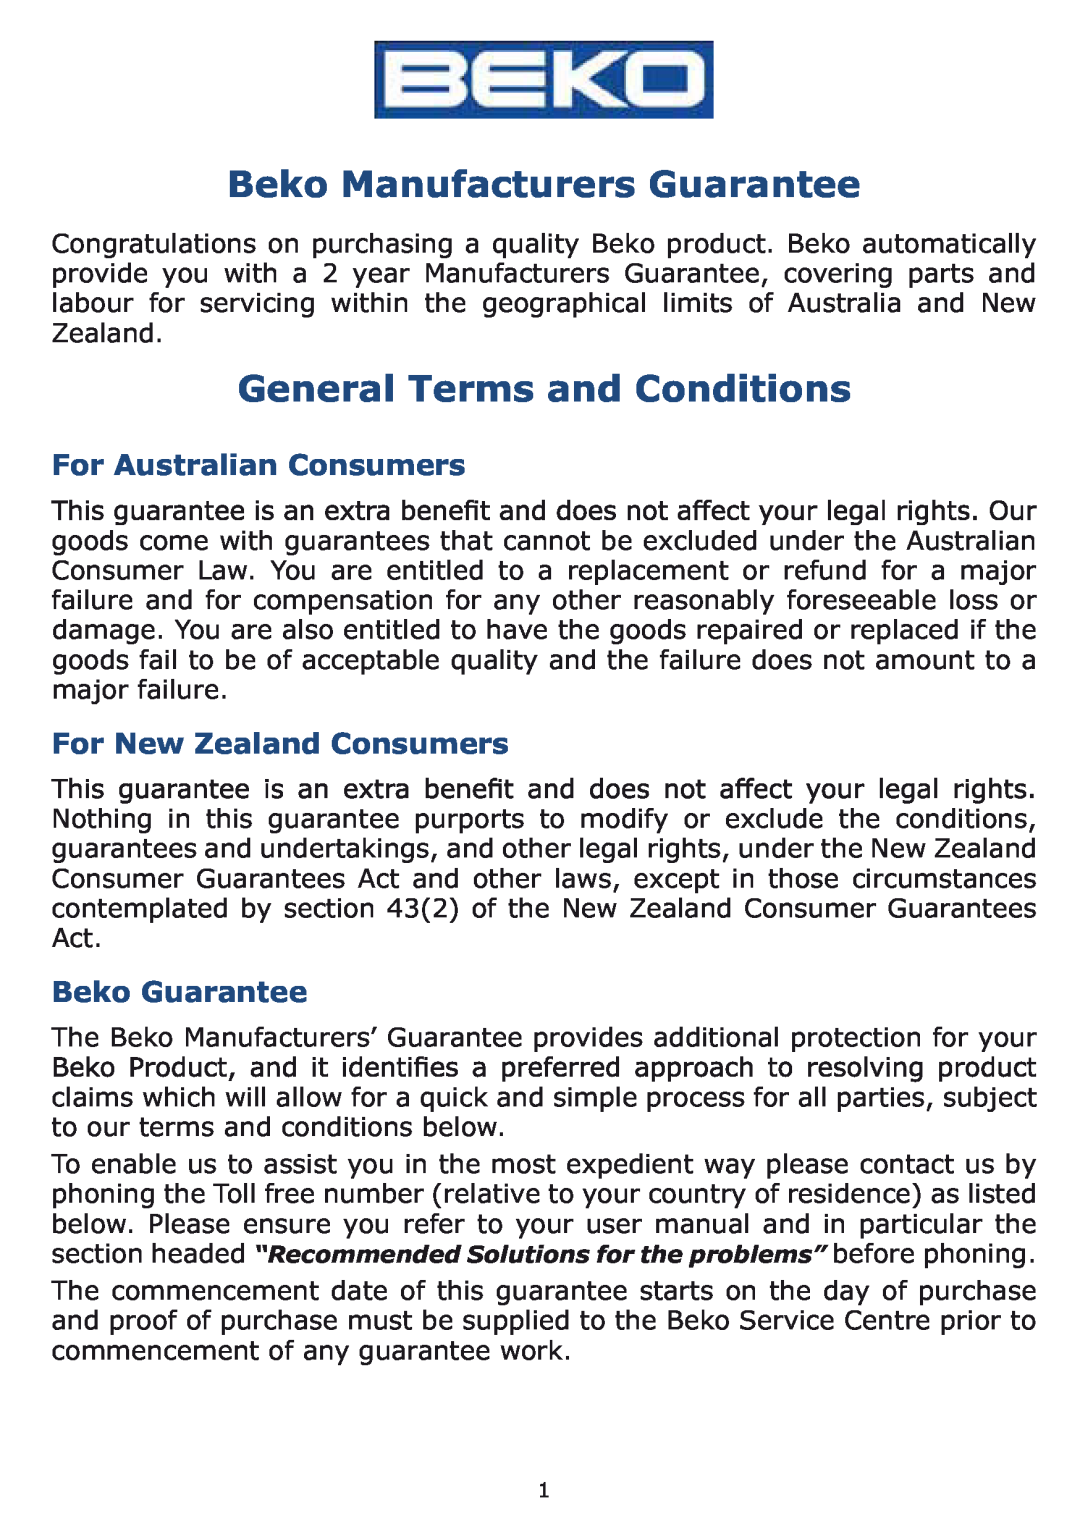 Beko CTB 6250 XA Beko Manufacturers Guarantee, General Terms and Conditions, For Australian Consumers, Beko Guarantee 